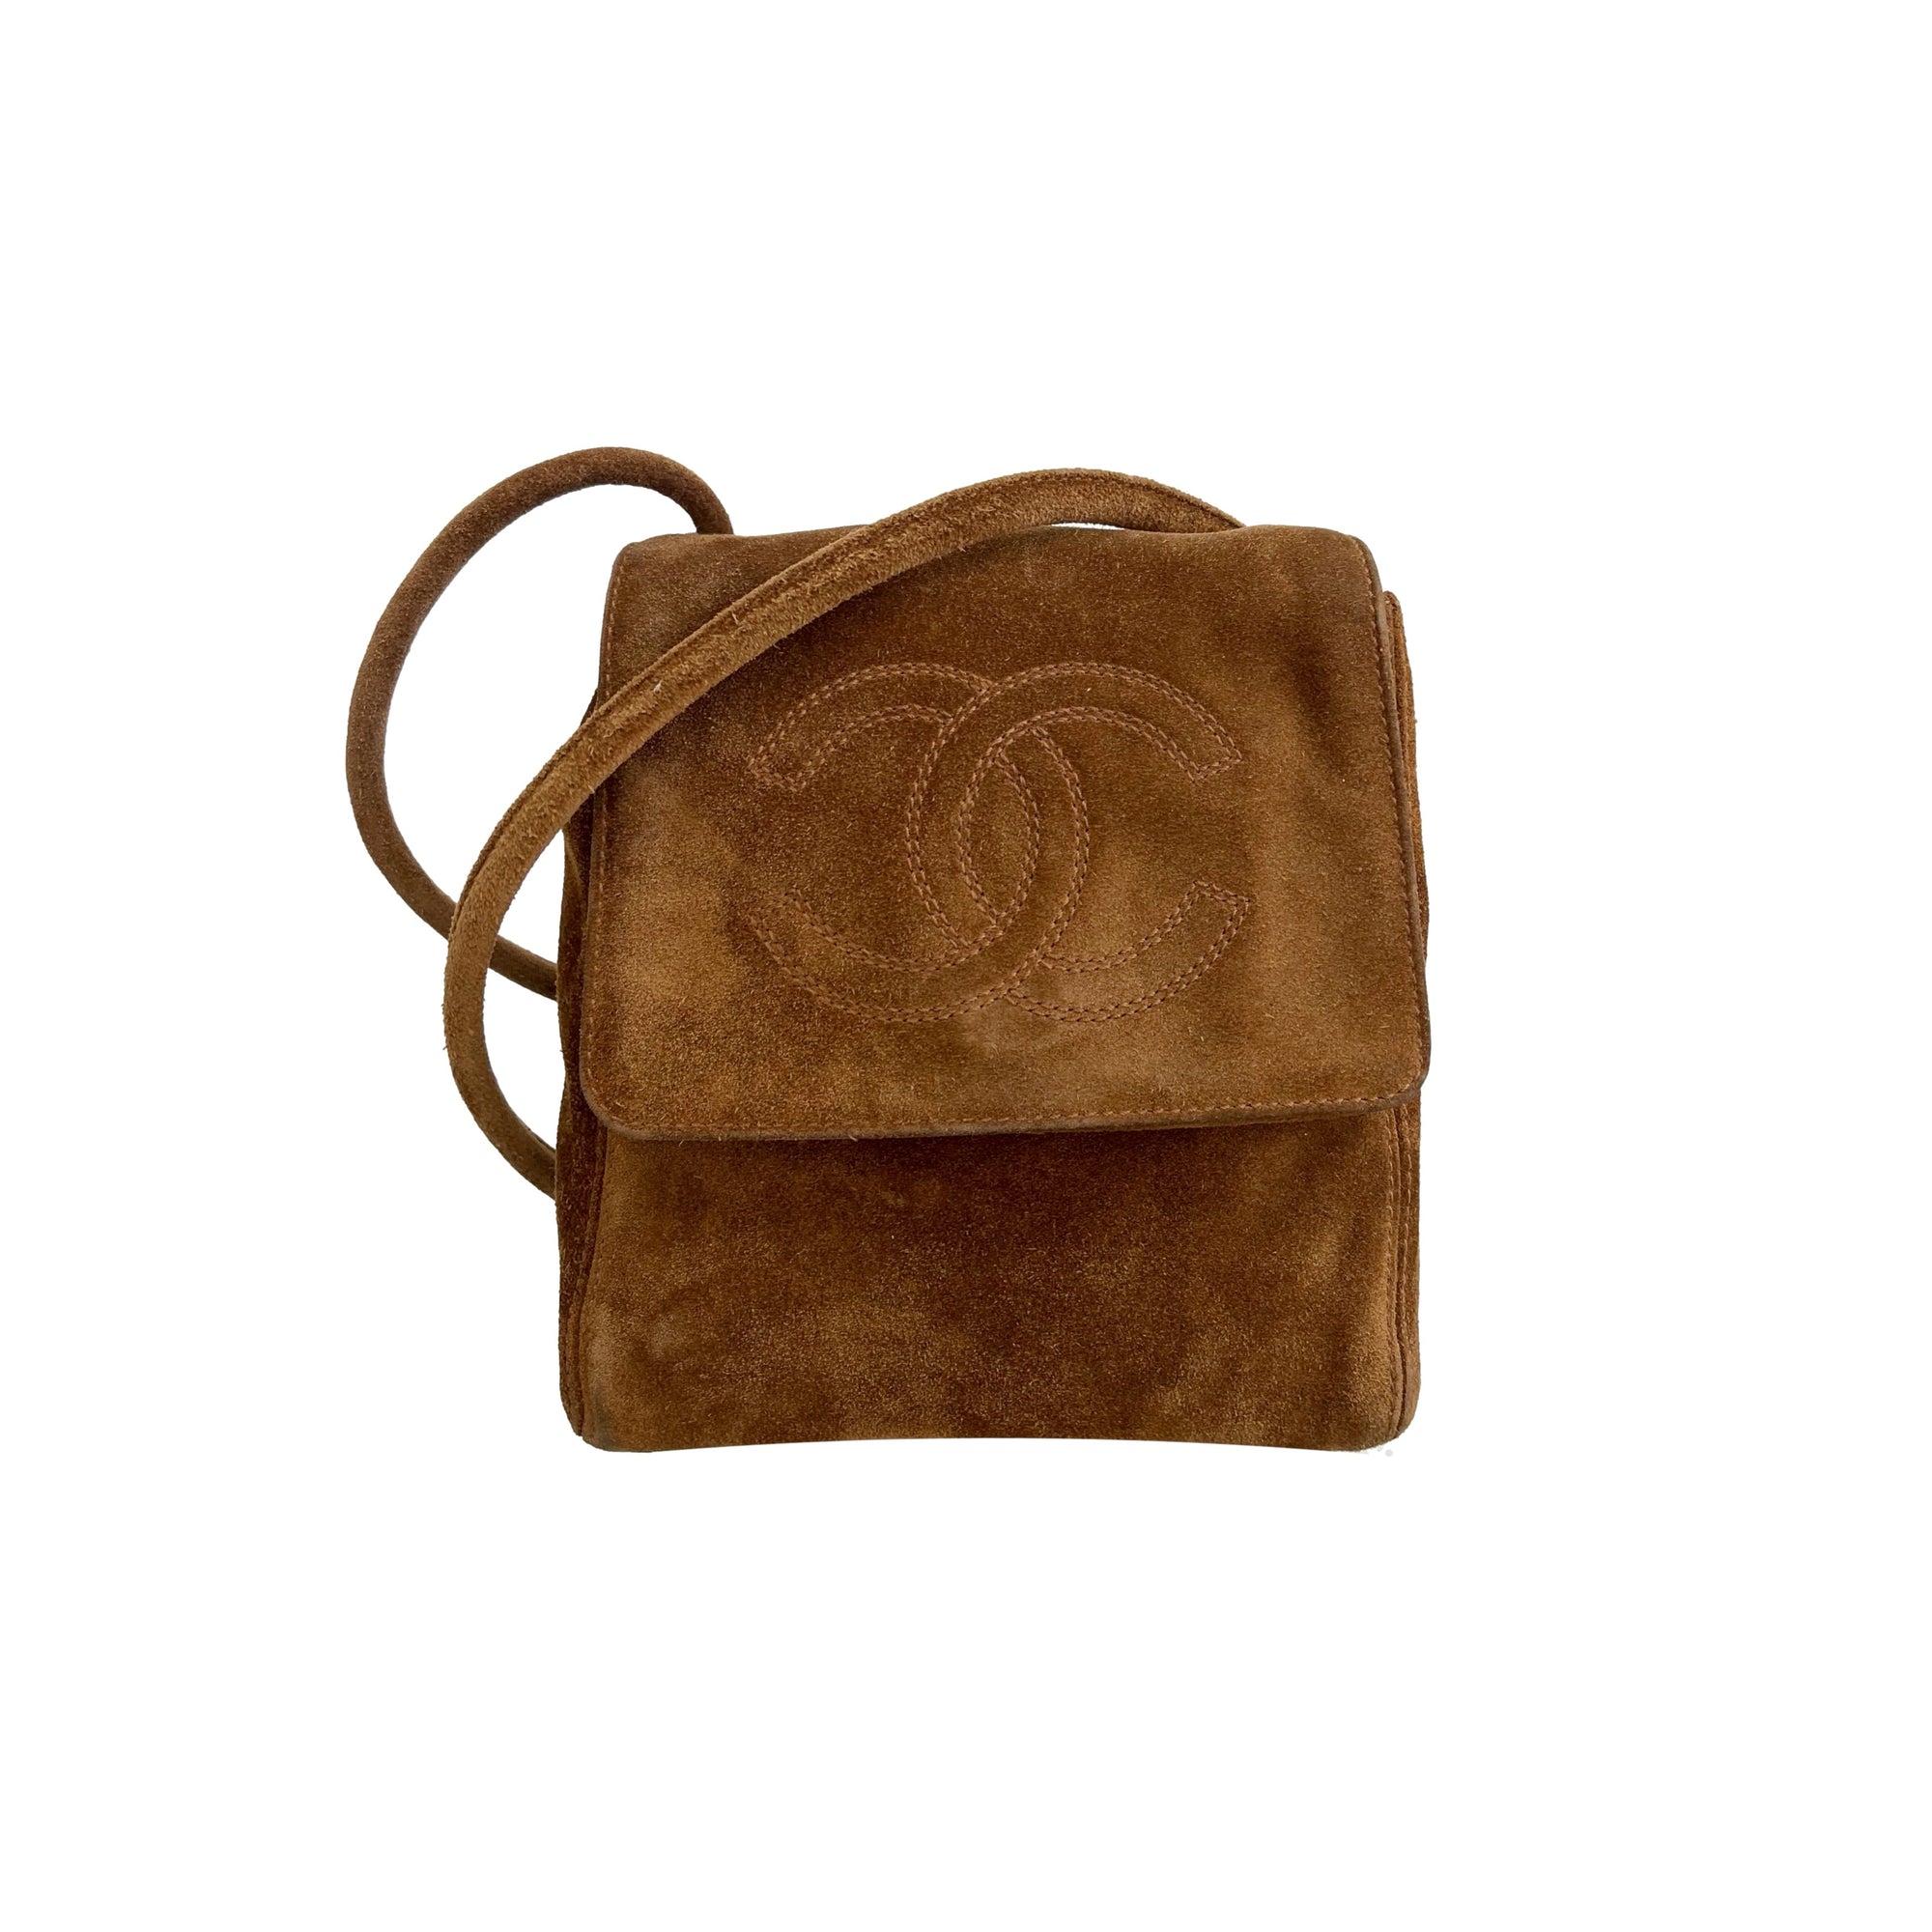 Chanel Tan Suede Mini Shoulder Bag